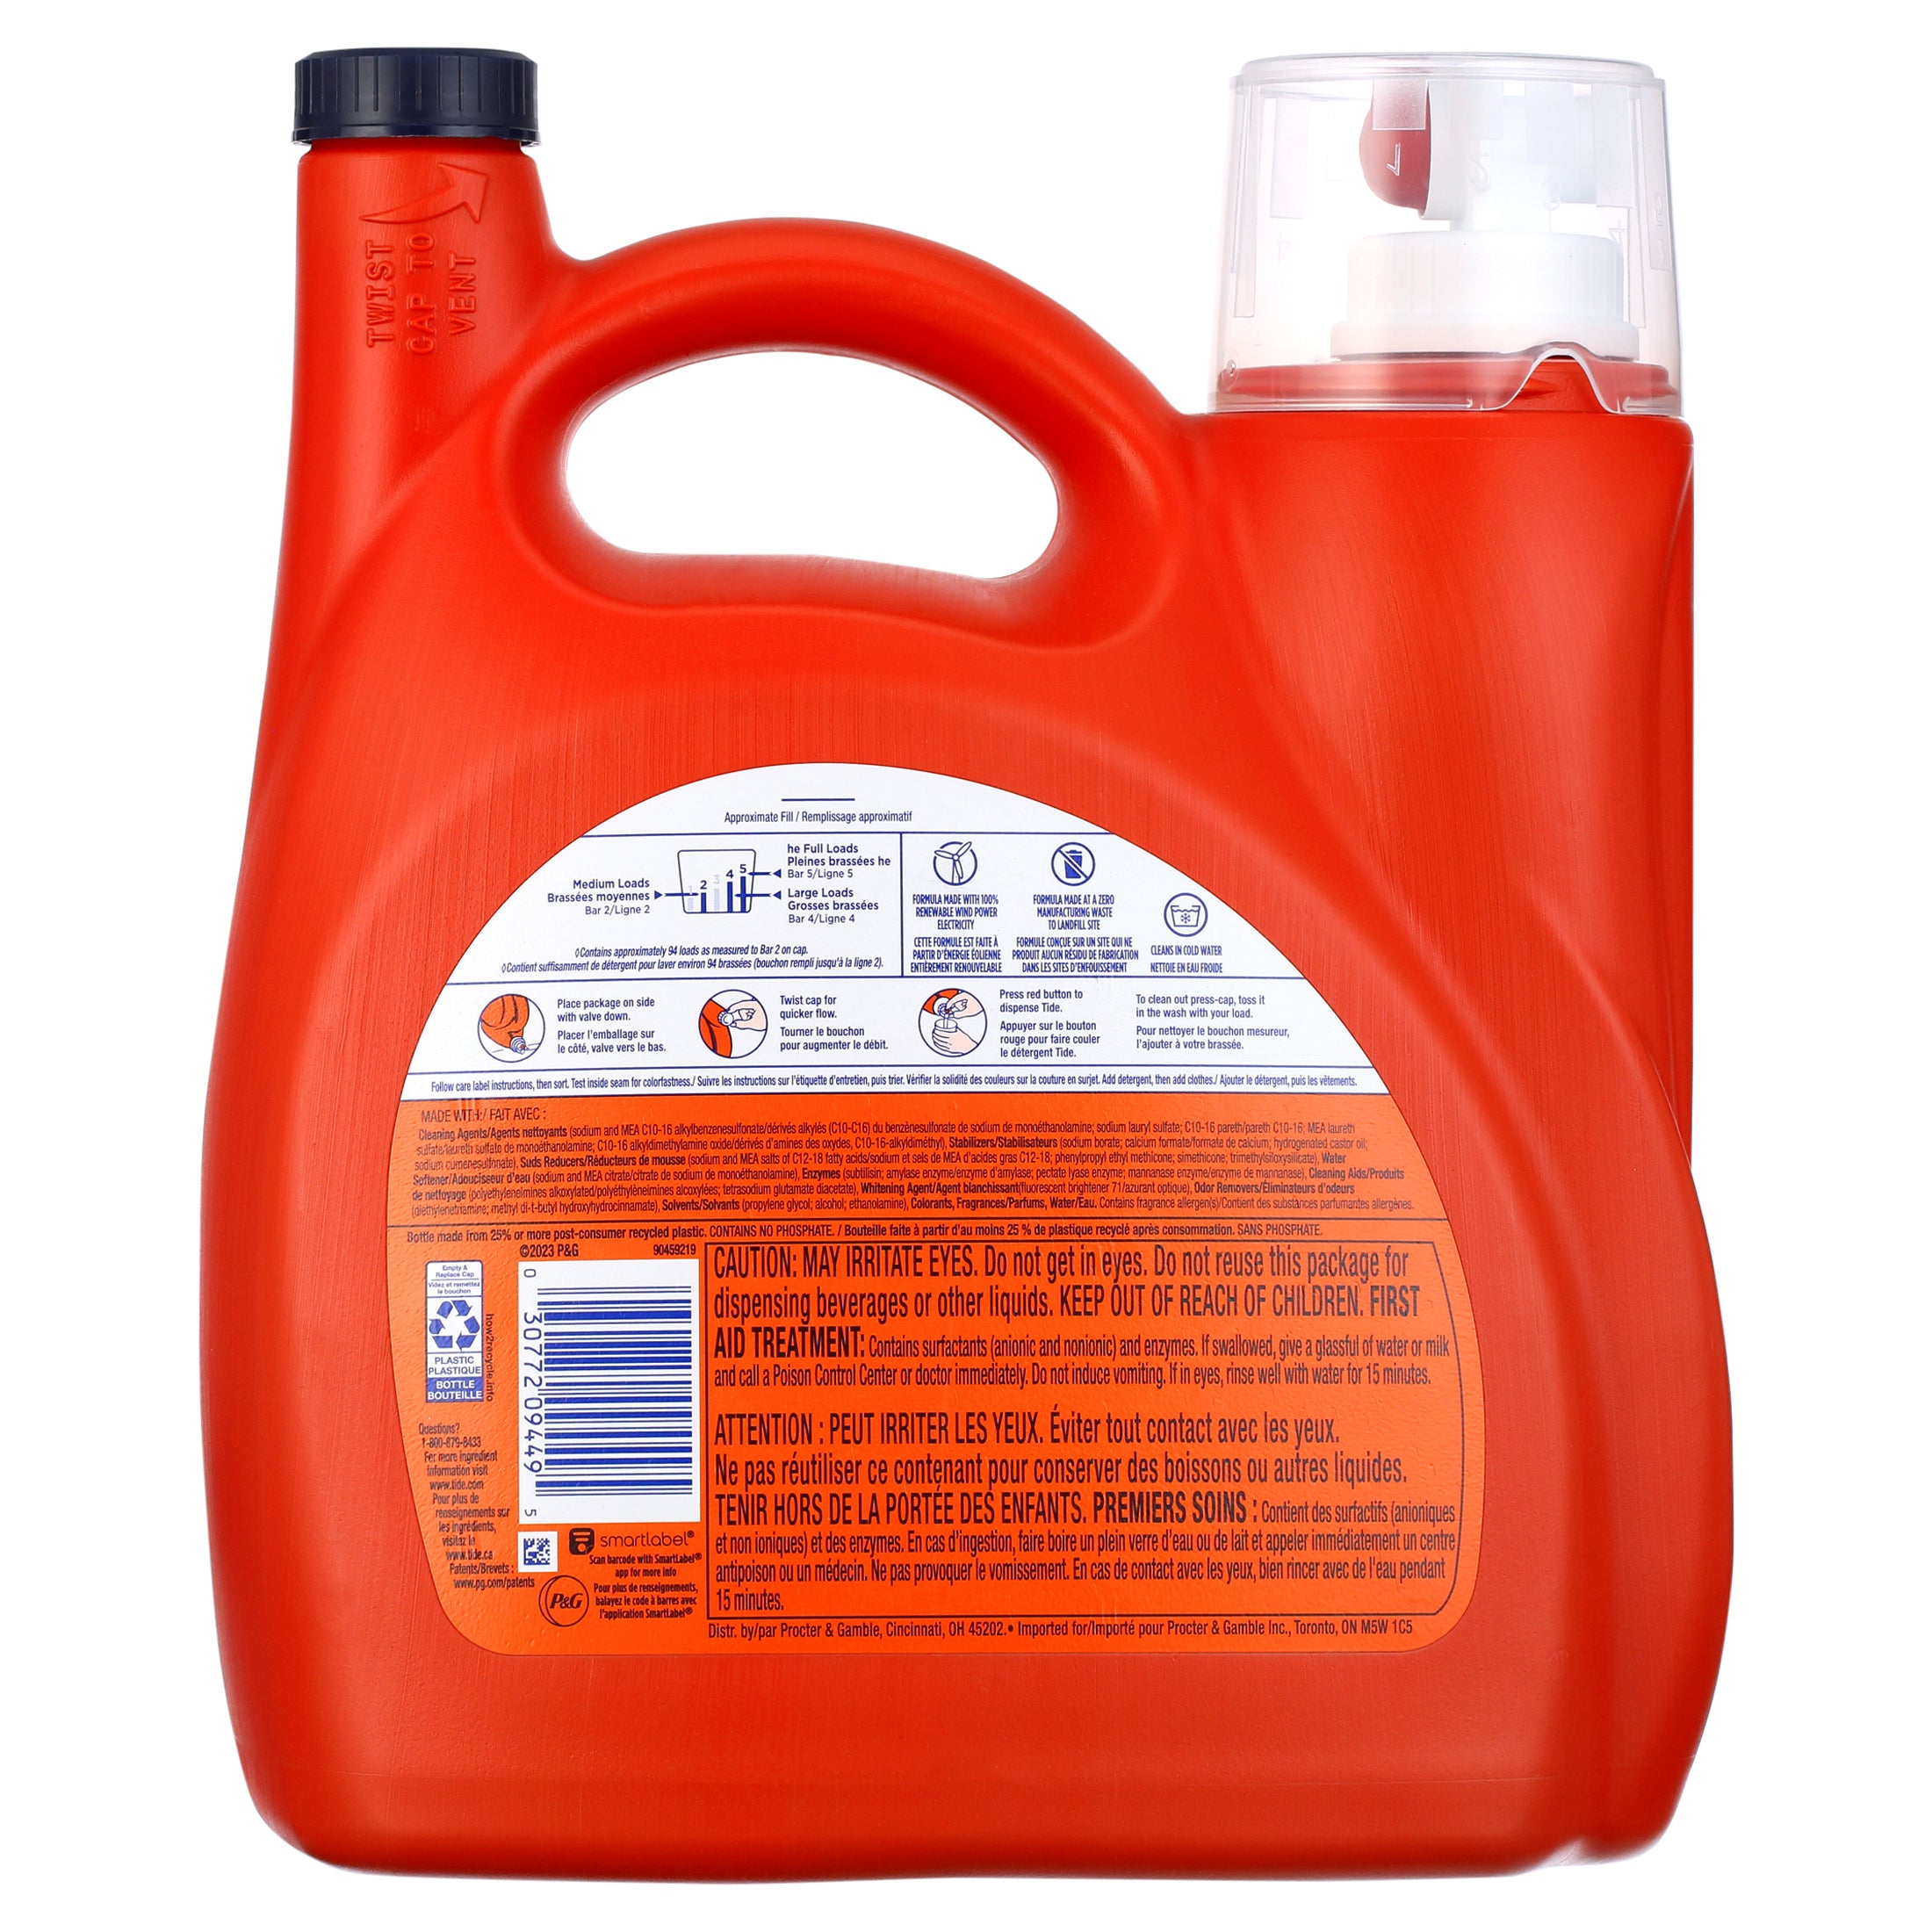 Tide Hygienic Clean Liquid Laundry Detergent, Spring Meadow, 89 Loads, 138 oz